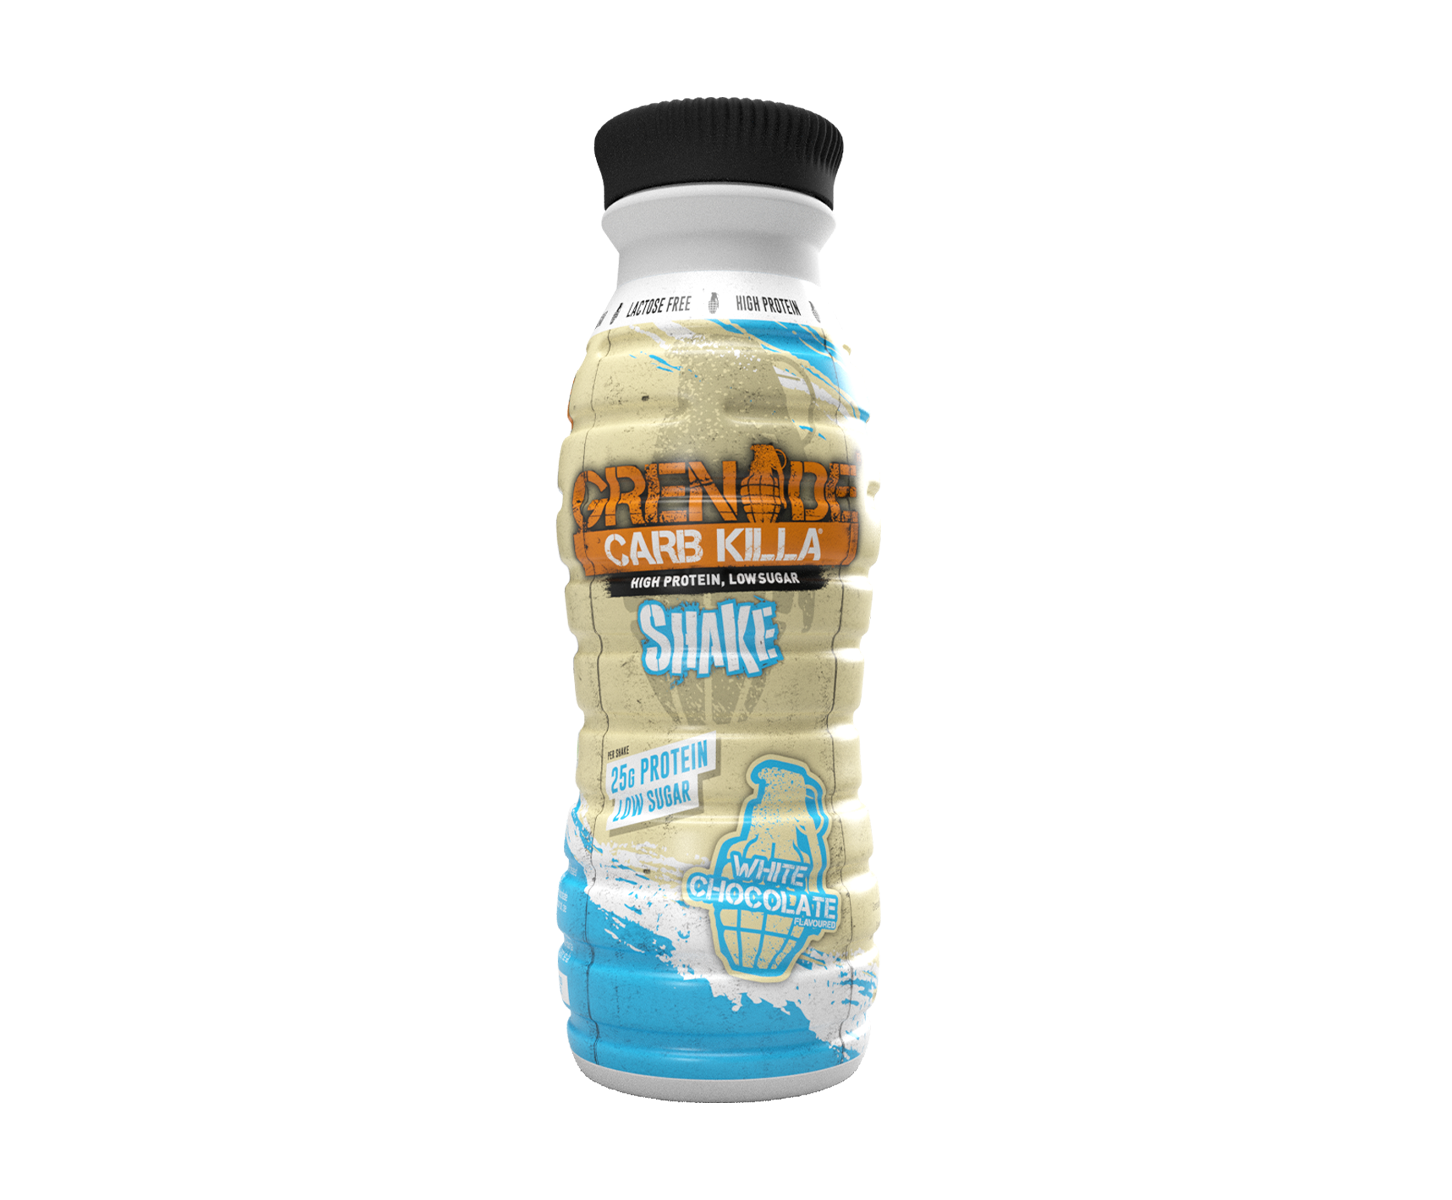 Carb killa protein shake, shake proteic rtd cu aroma de ciocolata alba, 330ml - grenade